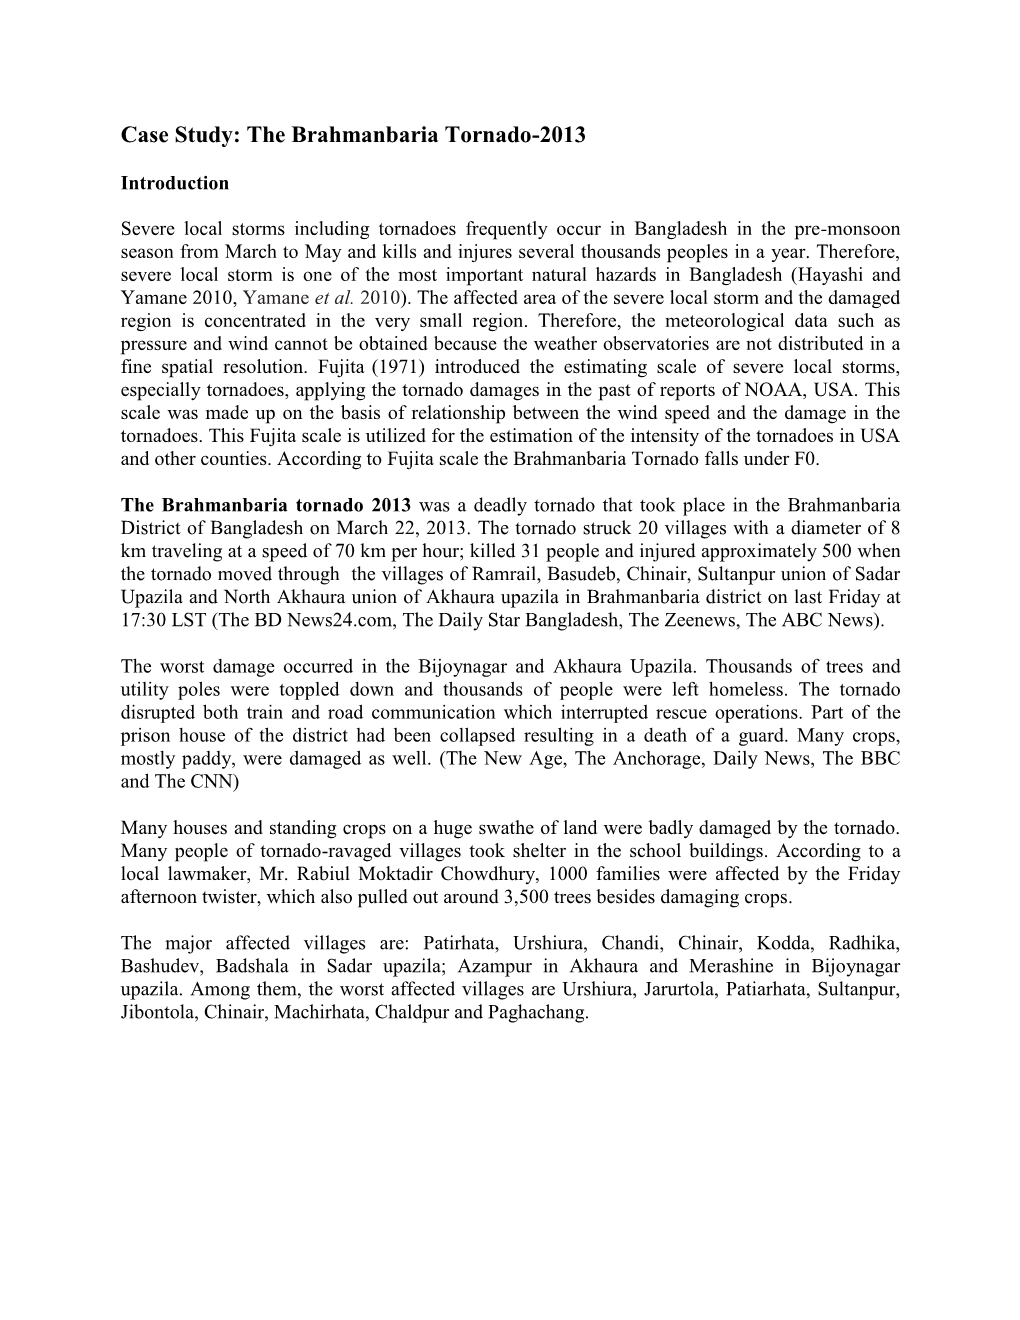 Case Study: the Brahmanbaria Tornado-2013